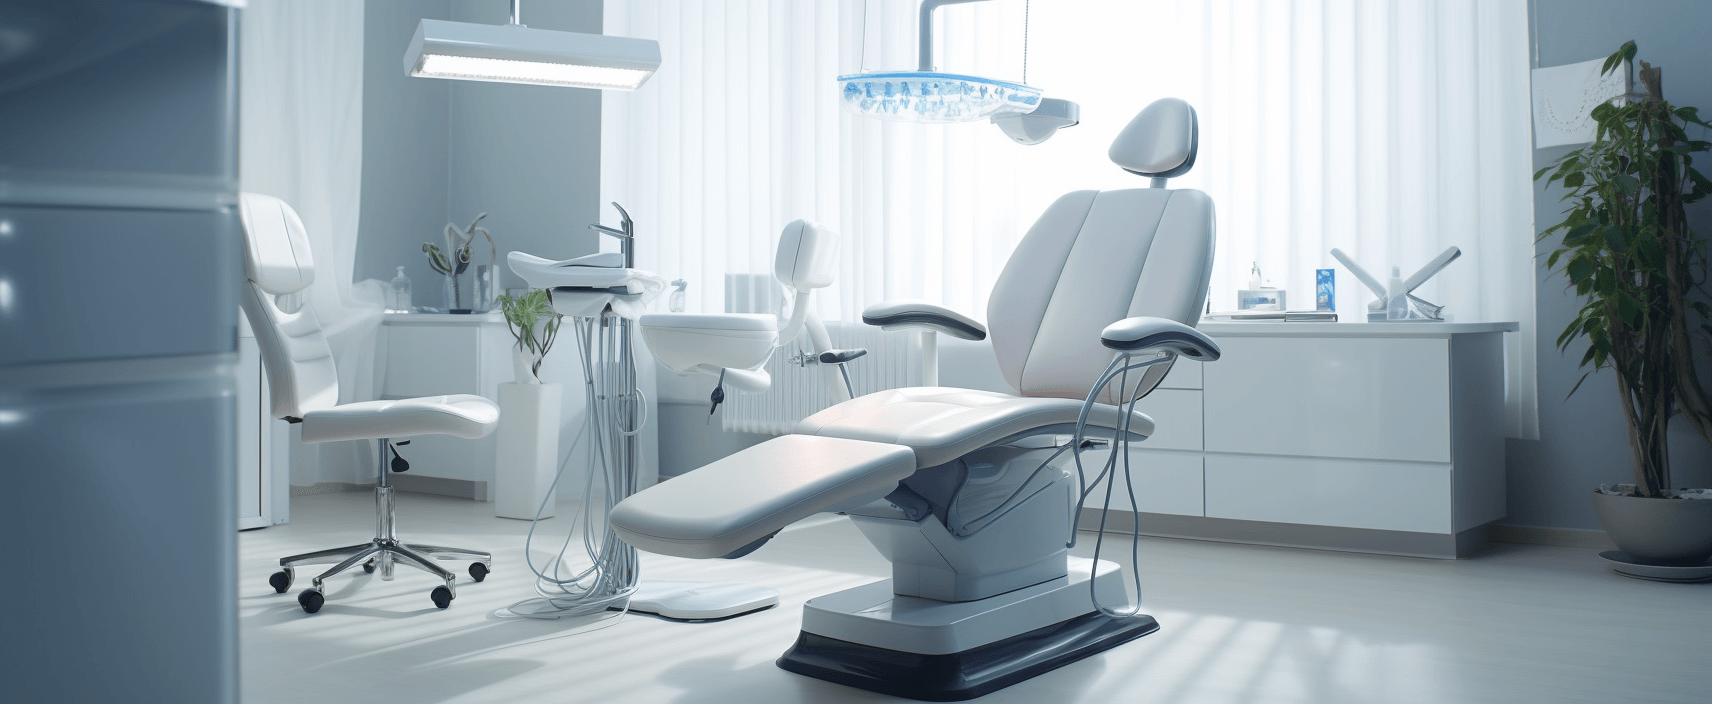 empty grey dental chair in a dental practice